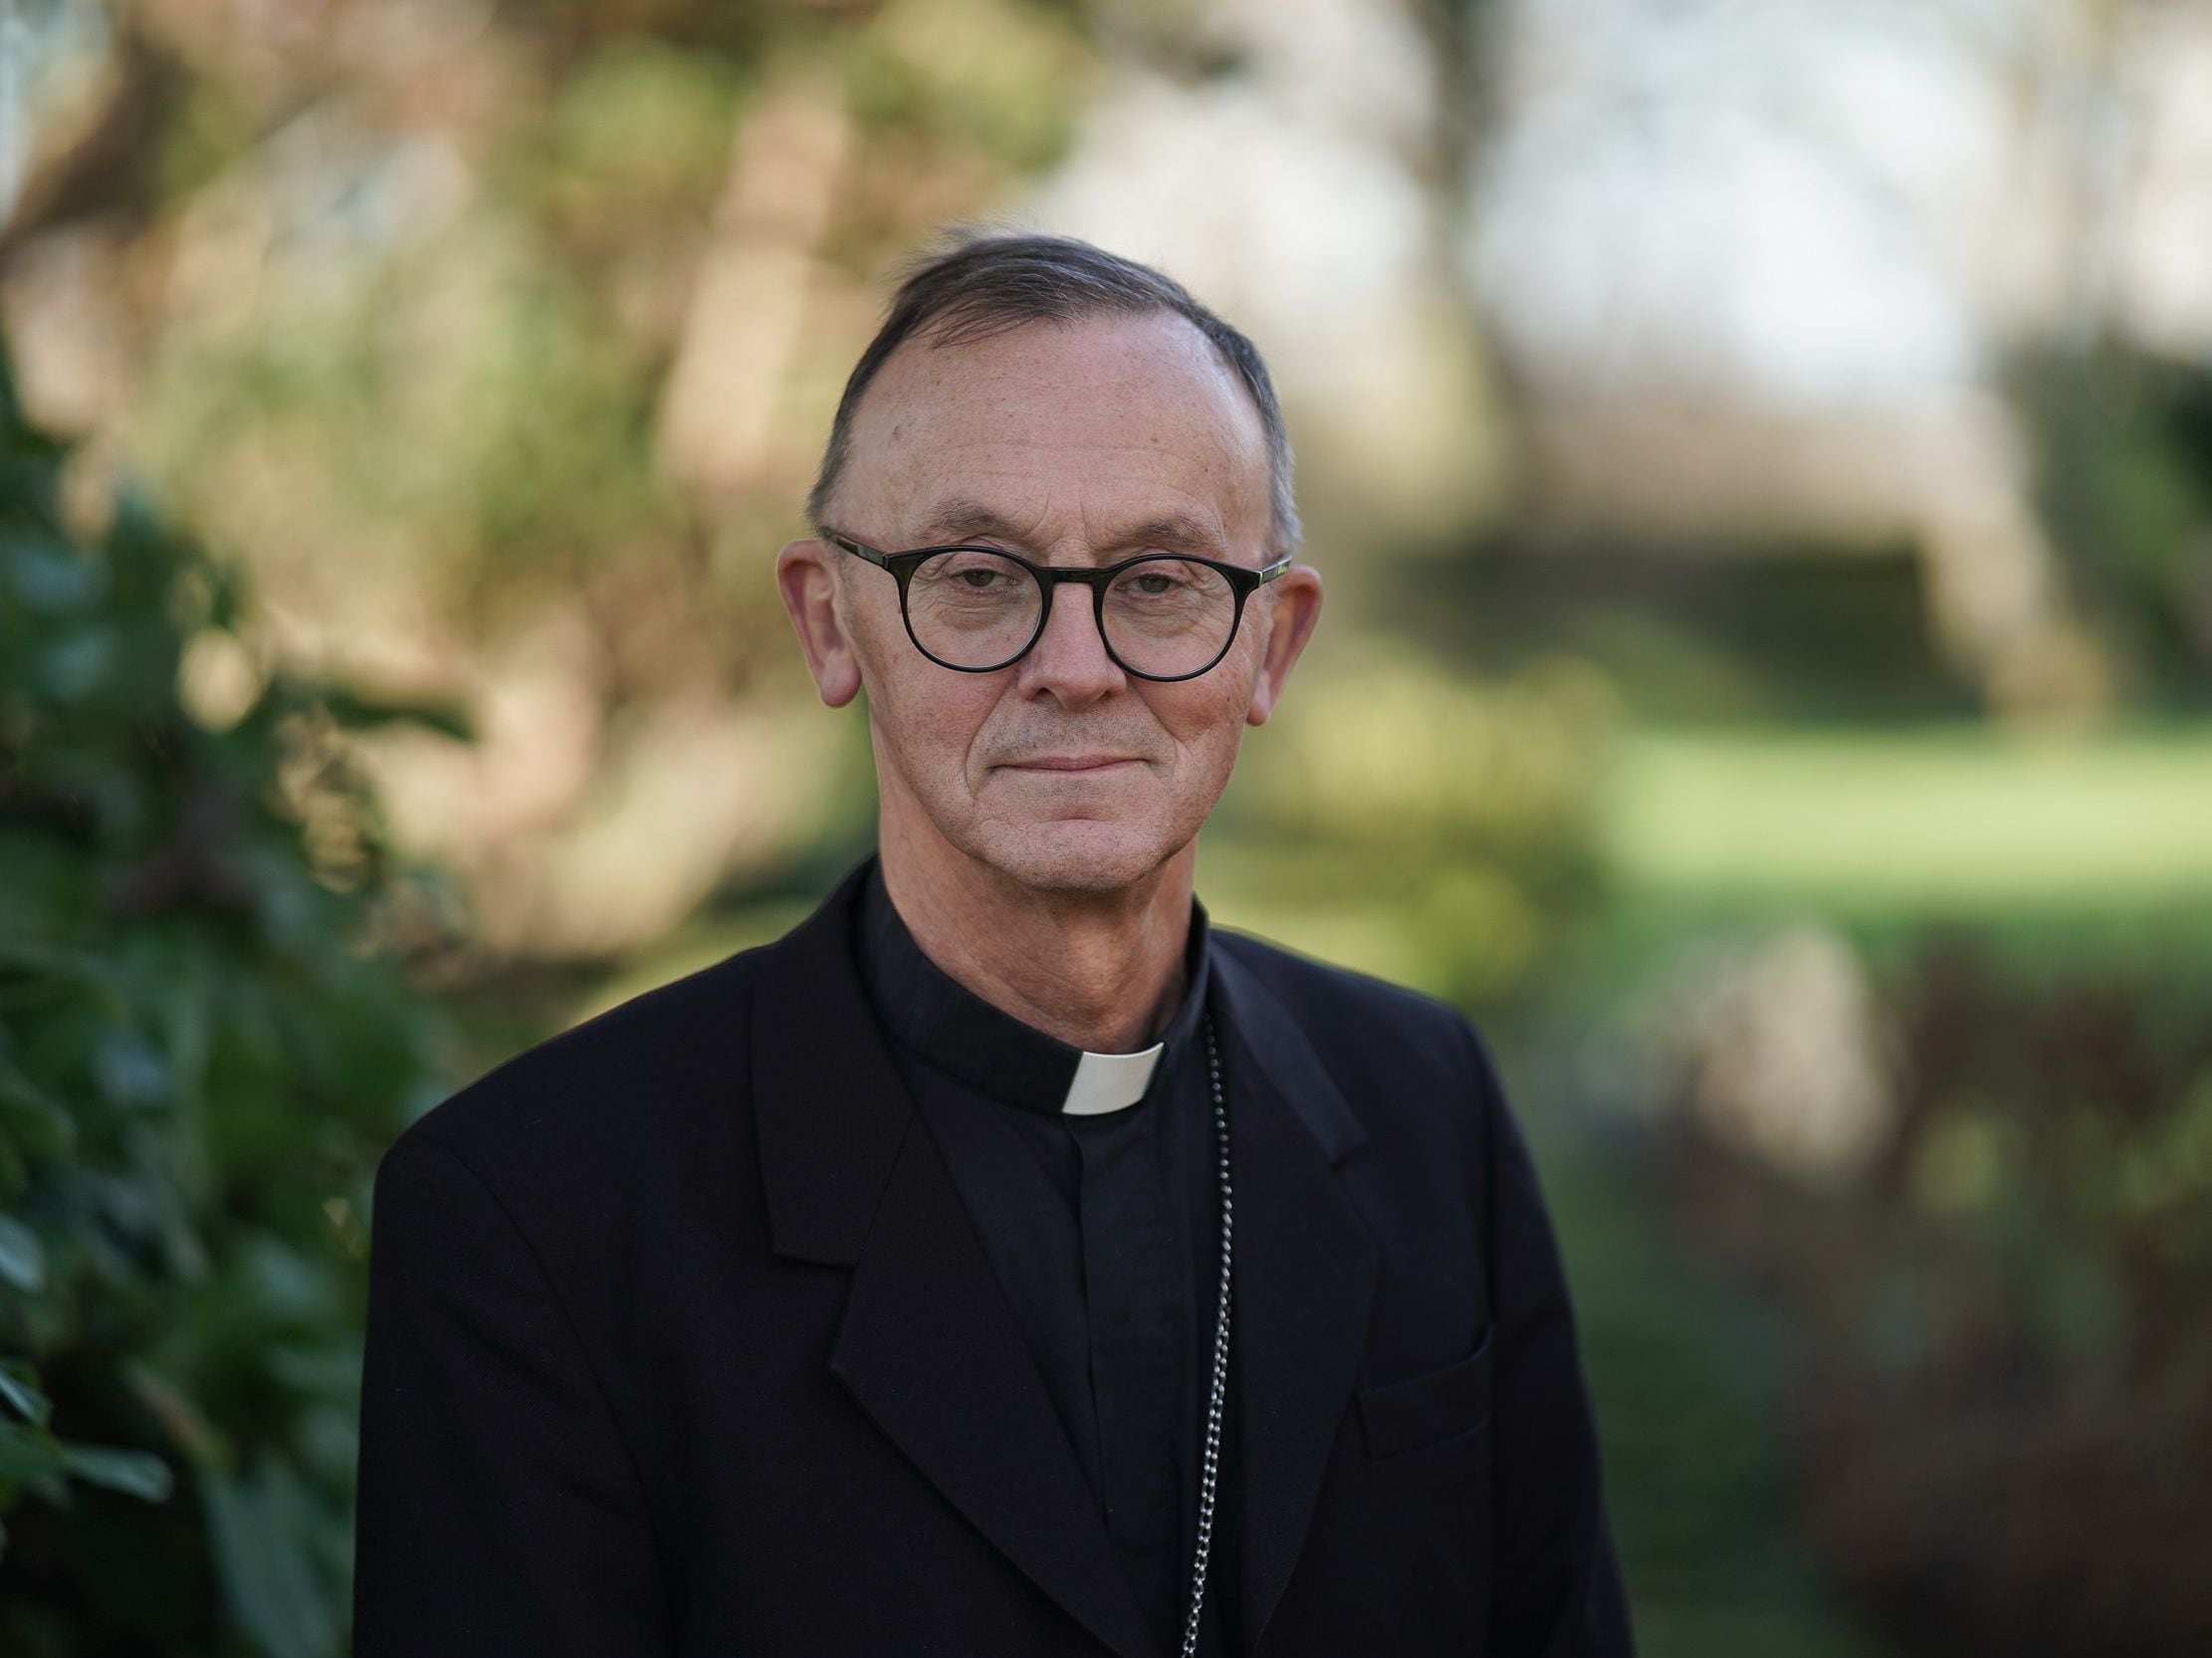 Process begins to find new Bishop of Worcester as retirement beckons for current Bishop